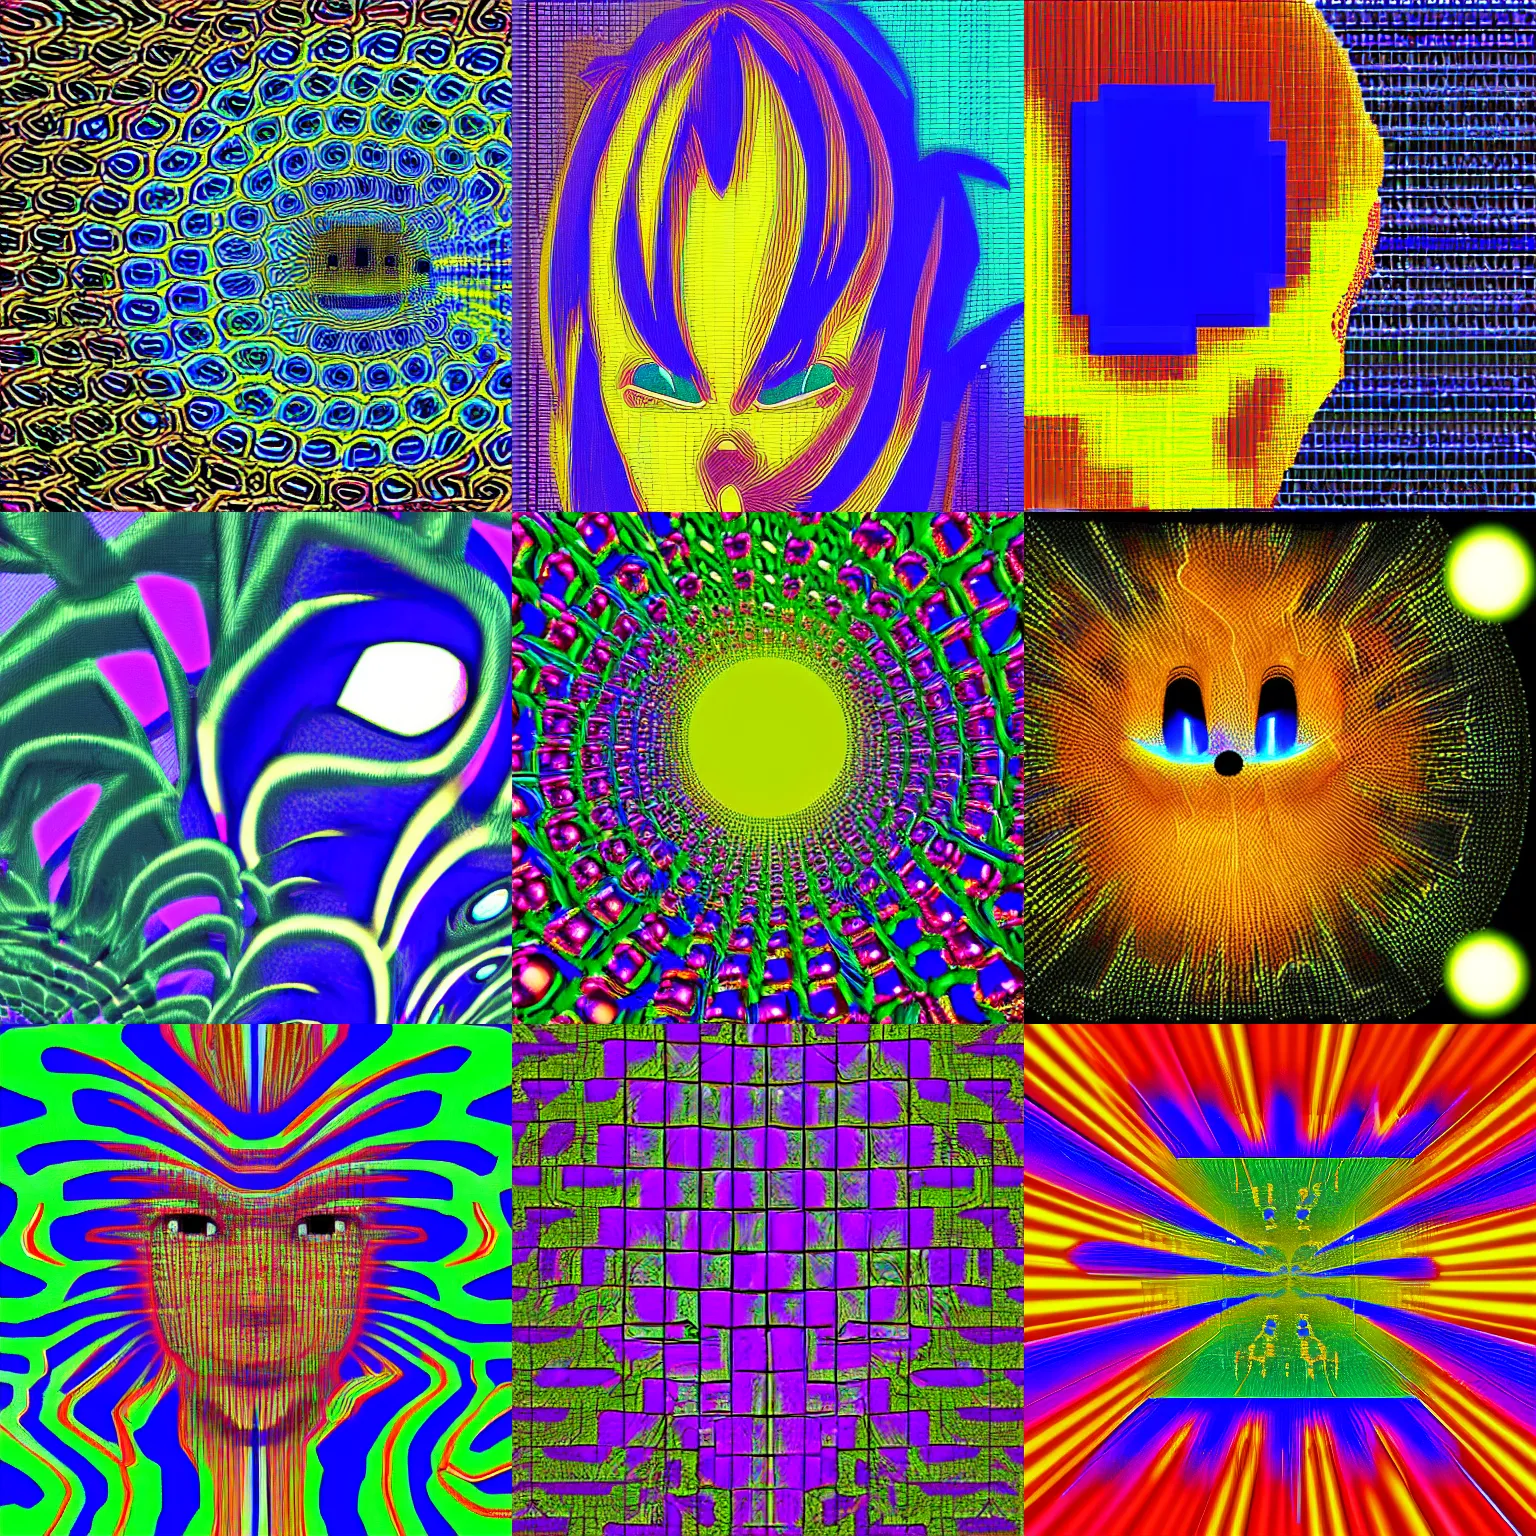 cat farting rainbows, pixel art, seamless mosaic, Gary, Stable Diffusion